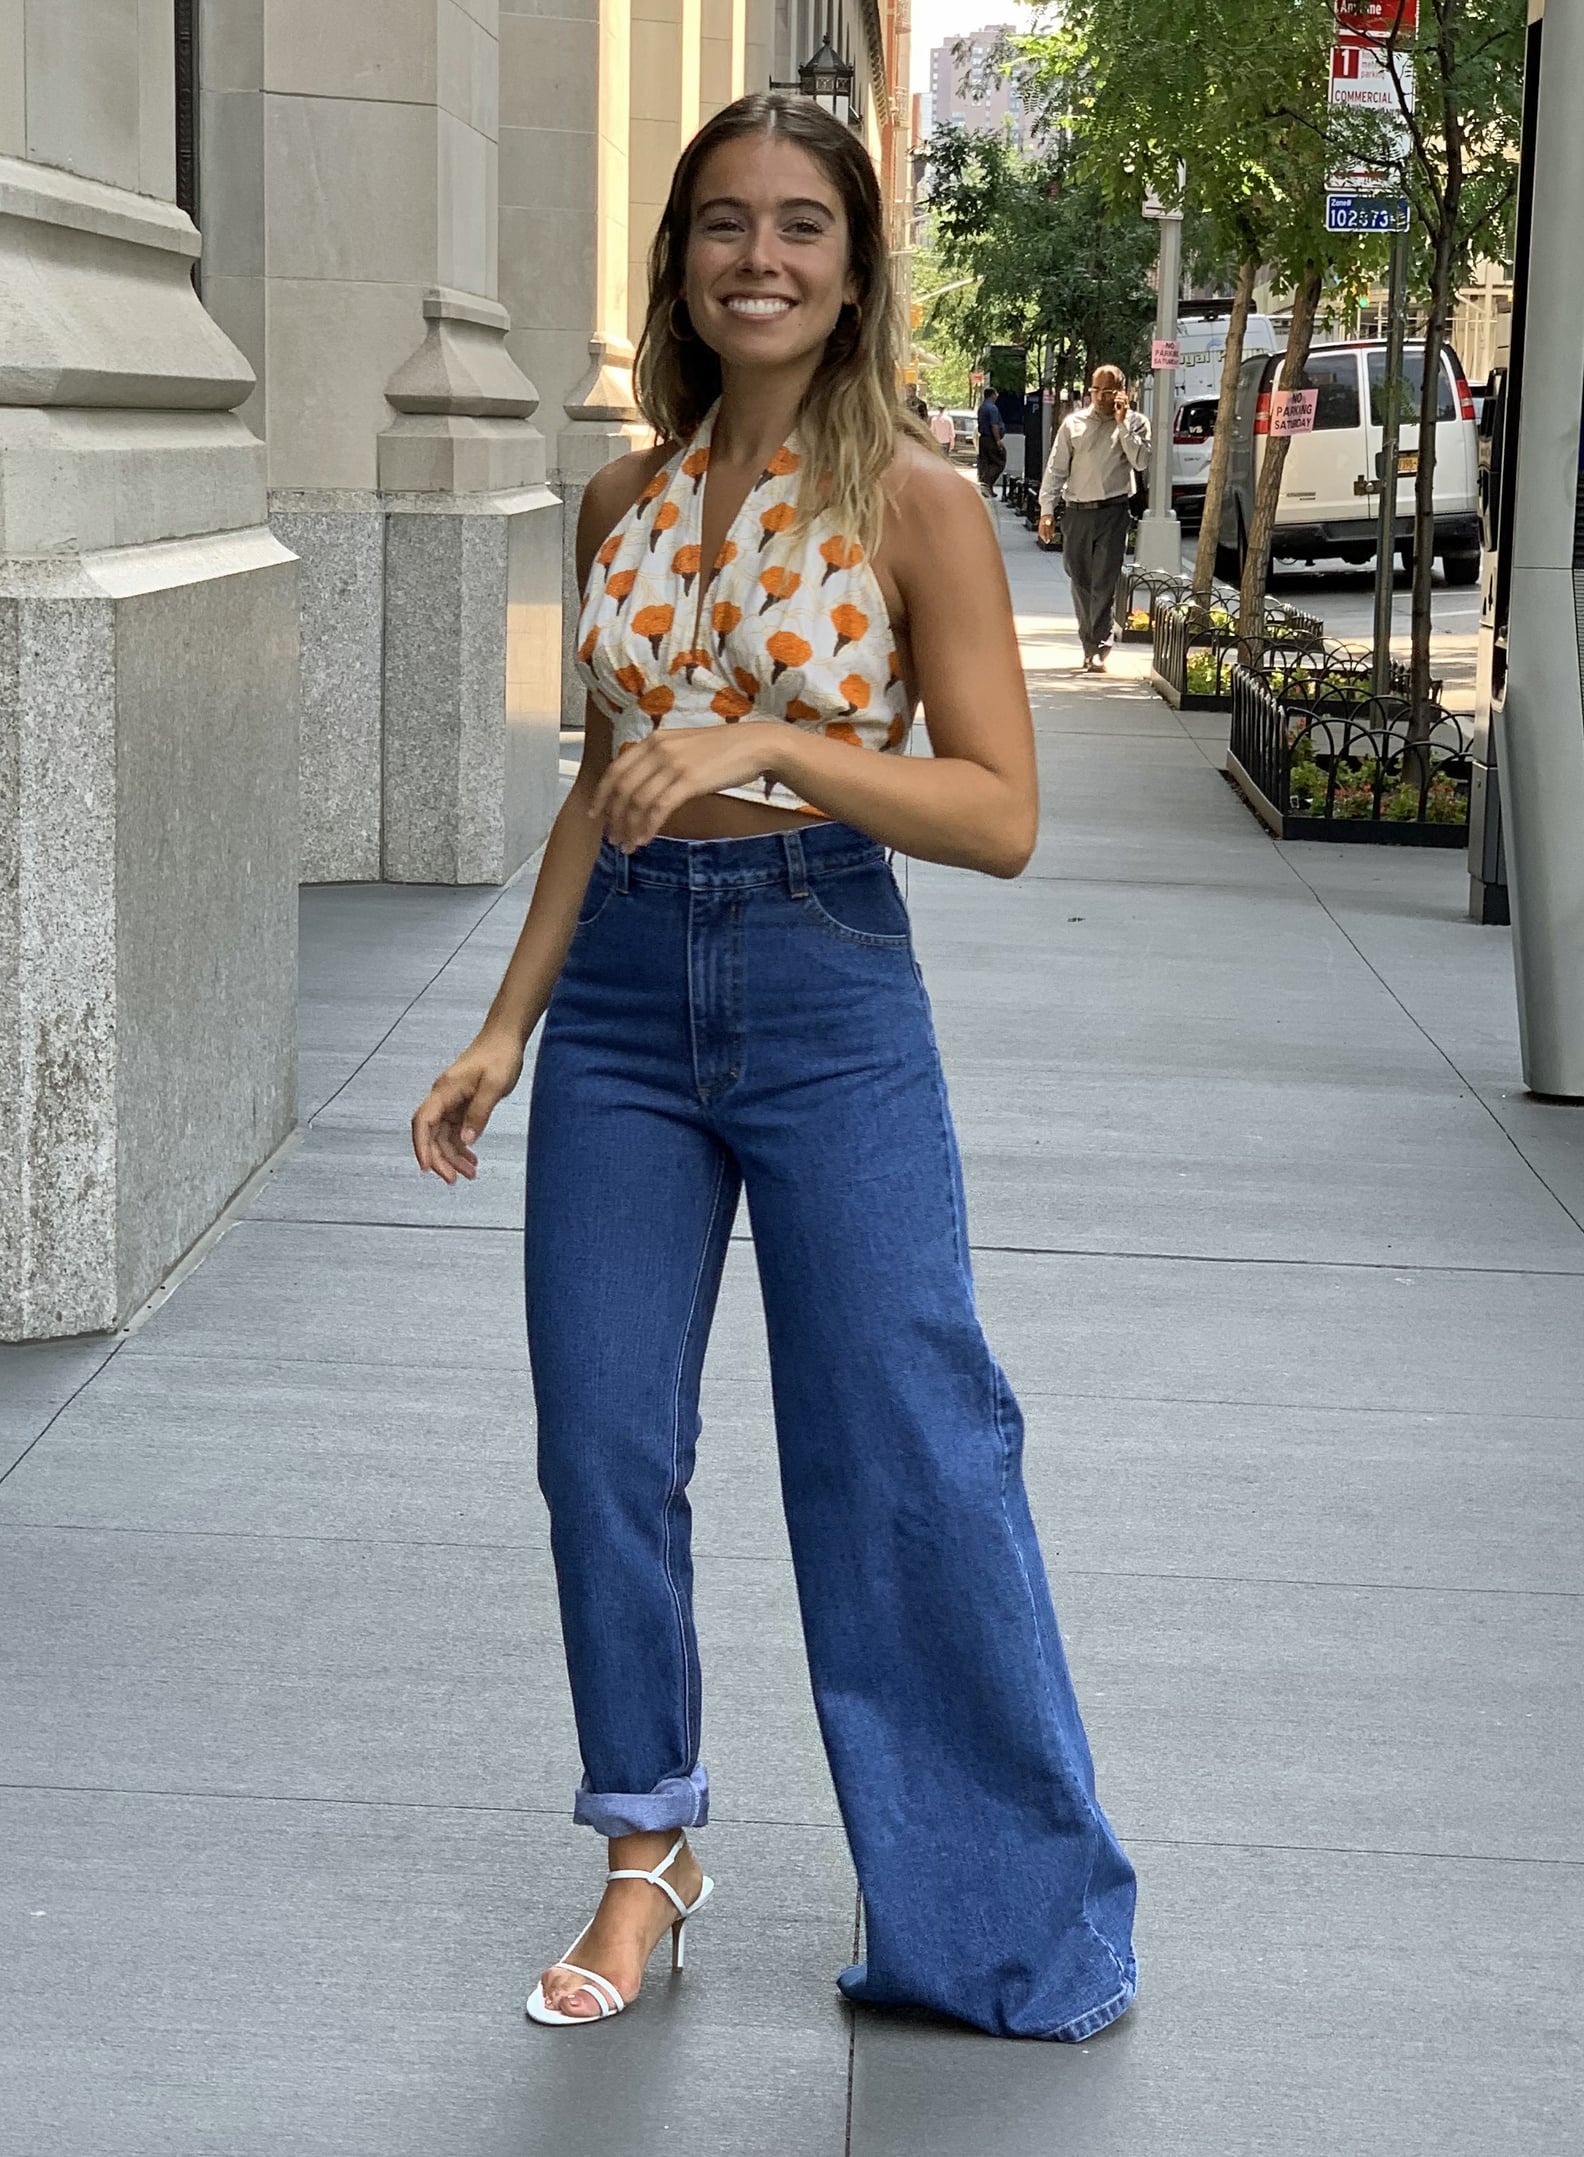 Asymmetrical Jeans Trend 2019 | POPSUGAR Fashion